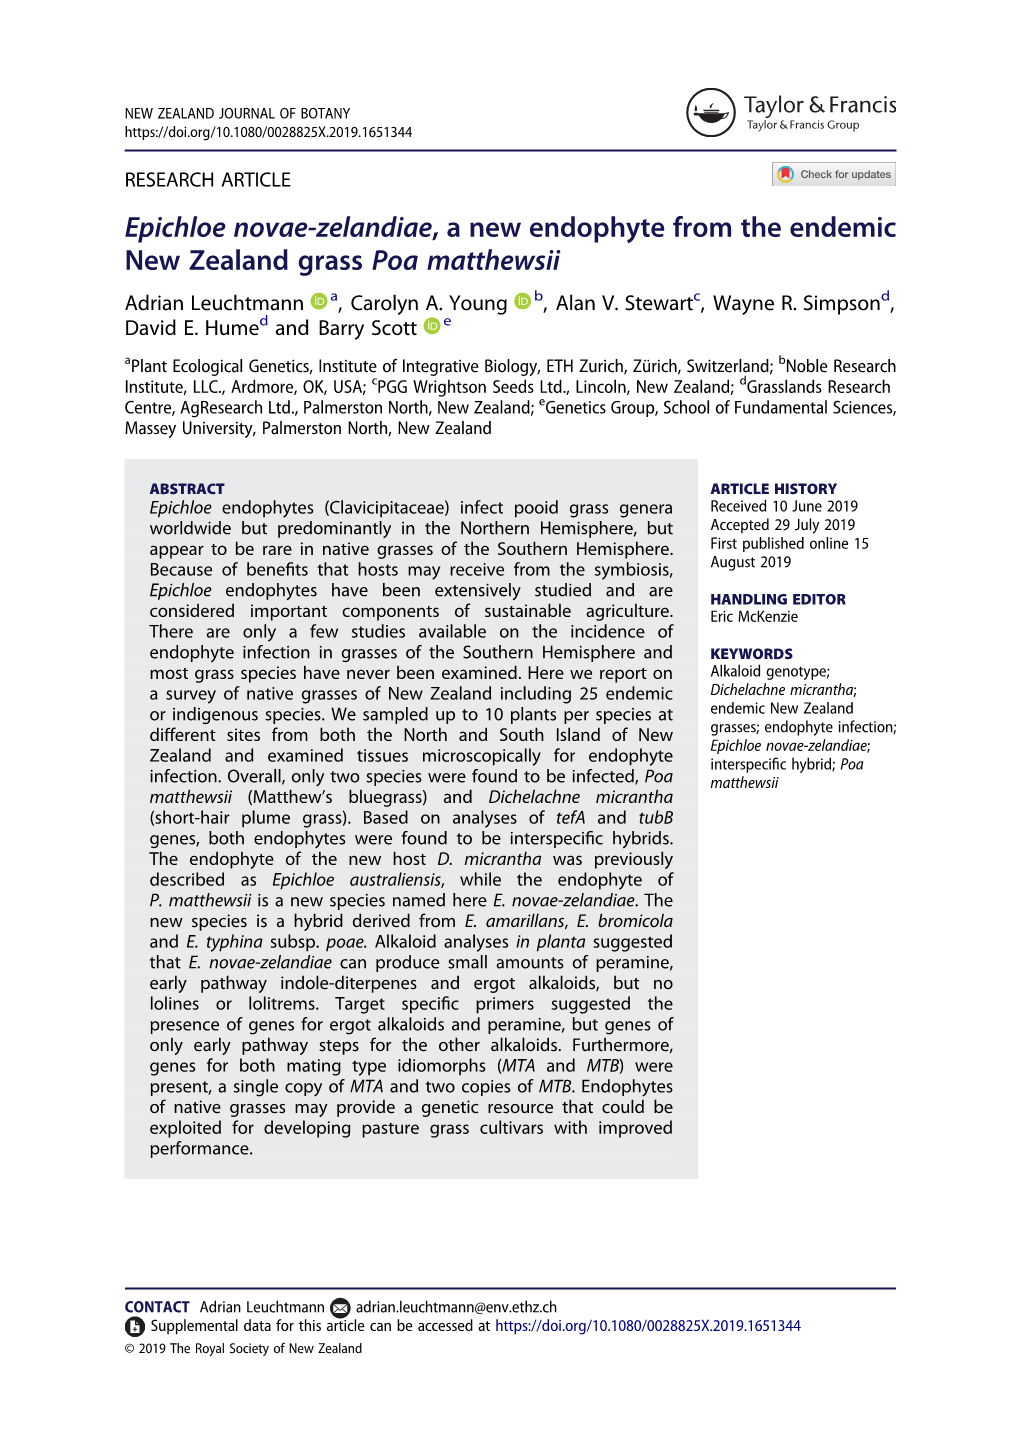 Epichloe Novae-Zelandiae, a New Endophyte from the Endemic New Zealand Grass Poa Matthewsii Adrian Leuchtmann A, Carolyn A